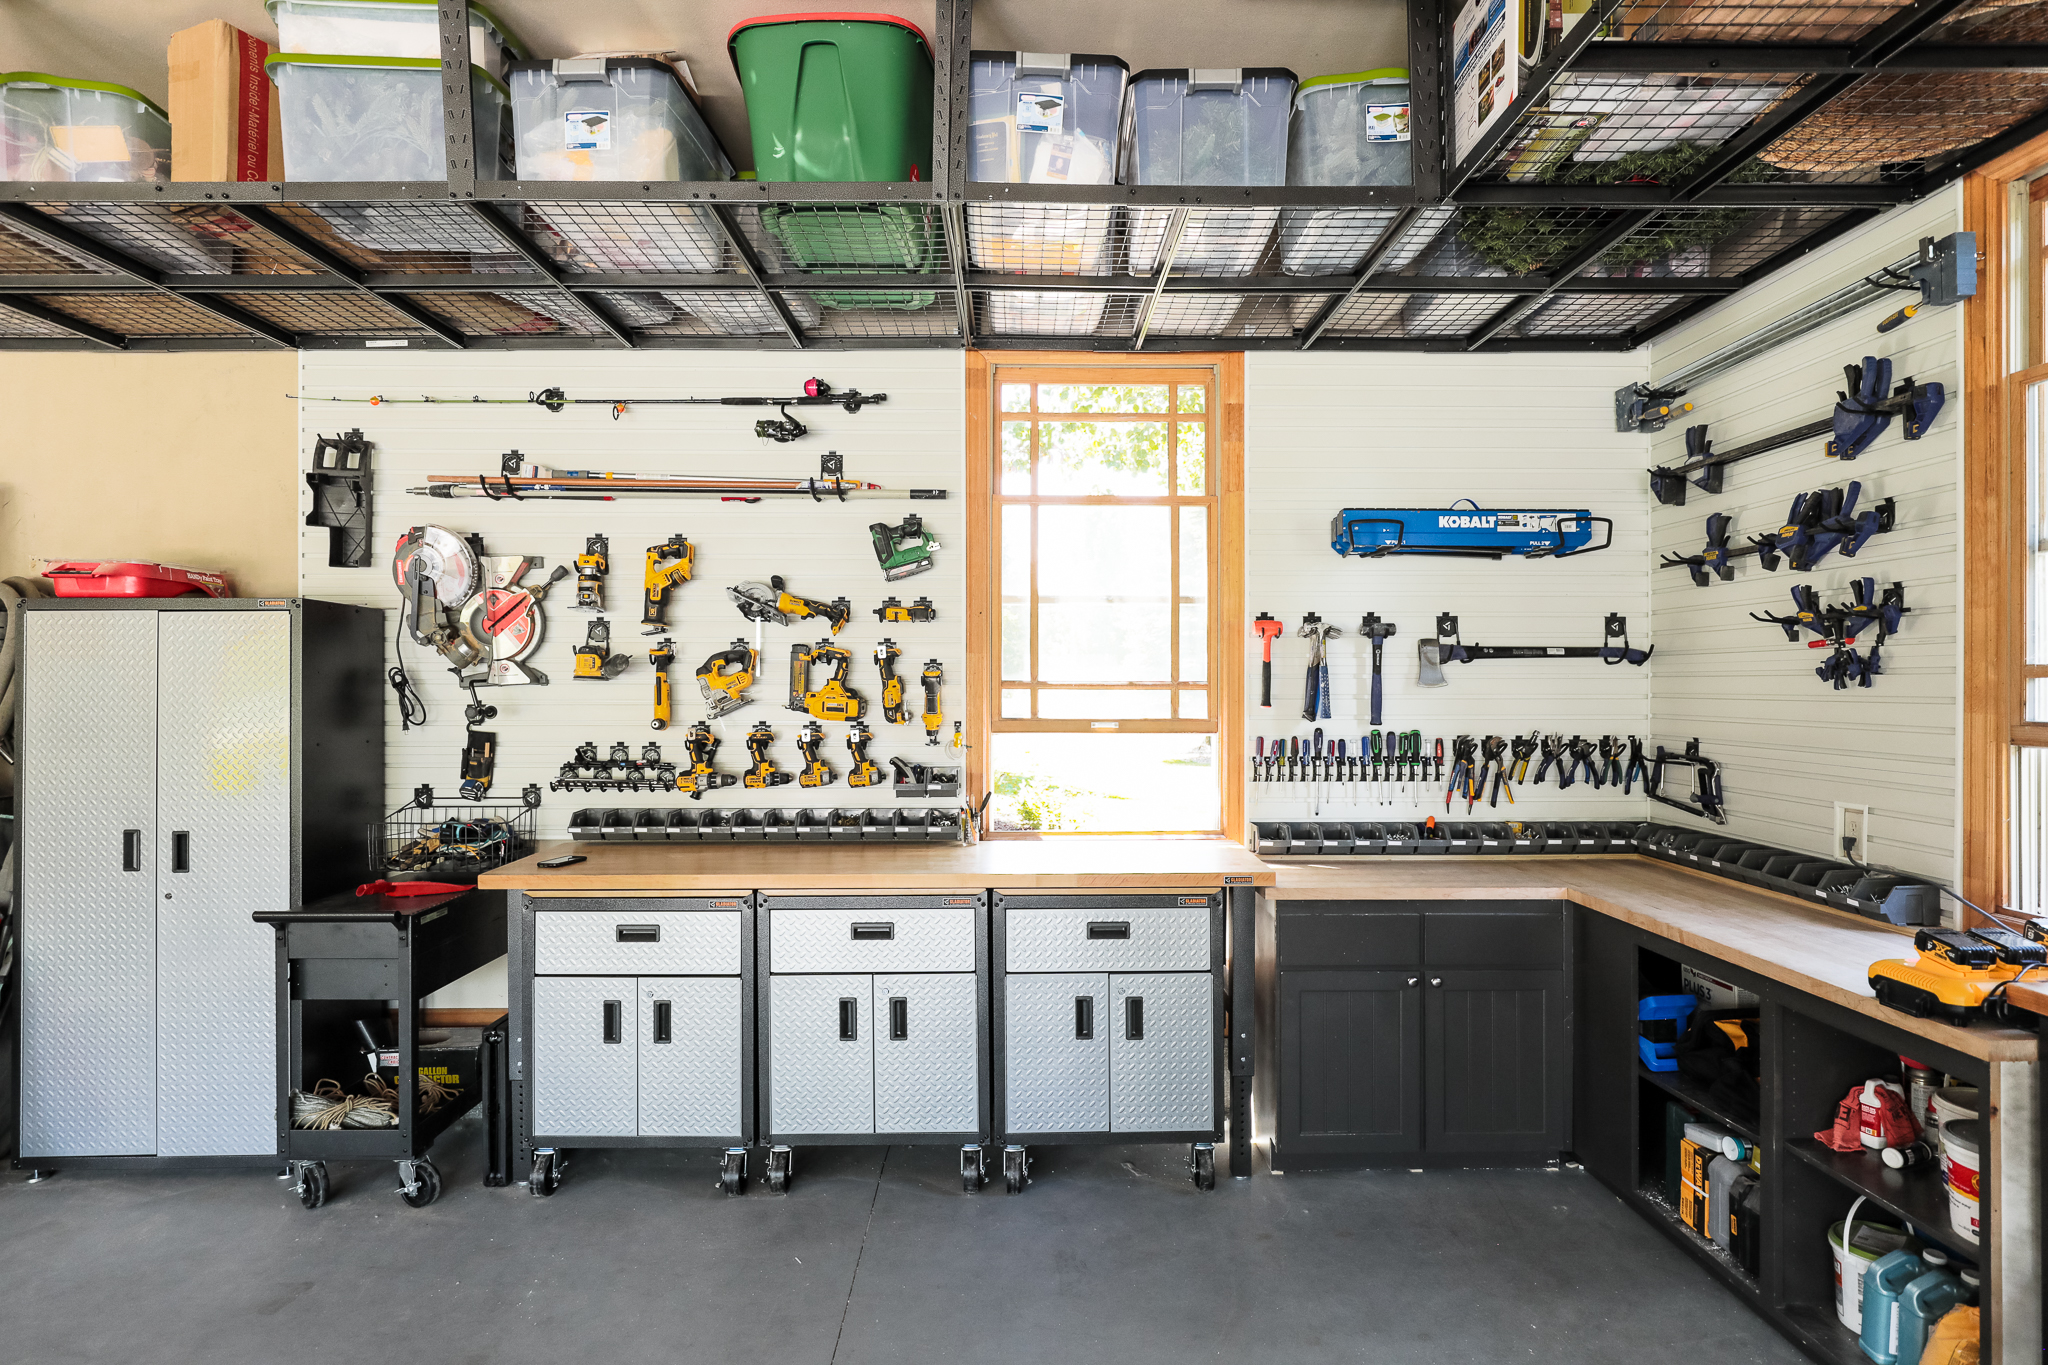 Storage And Organization In The Garage, Kobalt Garage Shelving